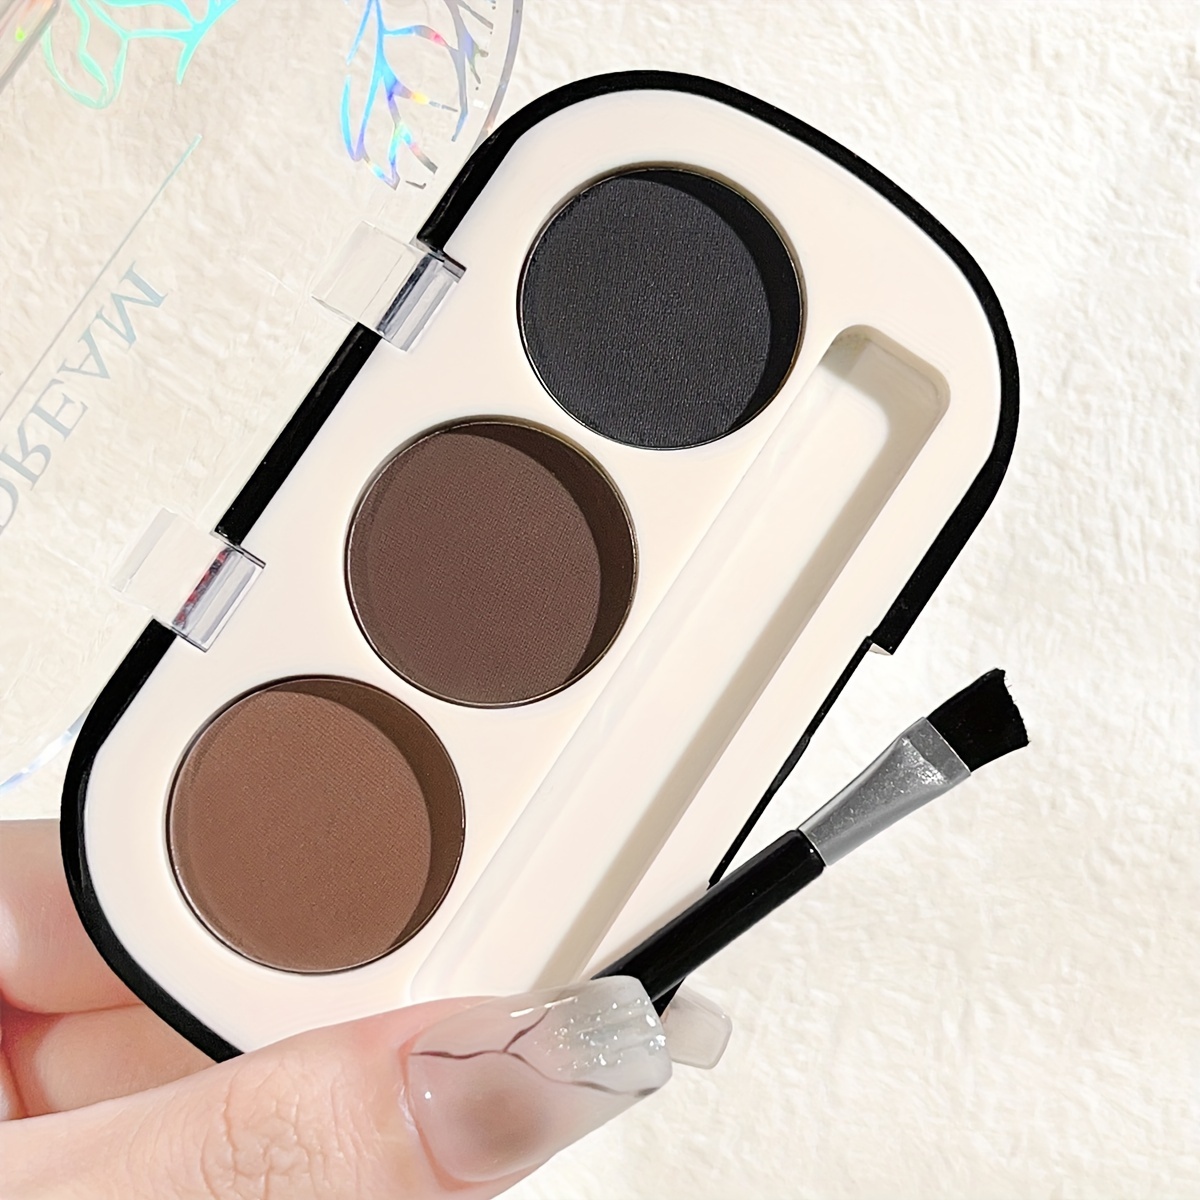 

Juju Dream 3-color Eyebrow Powder Palette With Brush - Waterproof, Sweatproof, Long-lasting & High Pigment For Natural Look